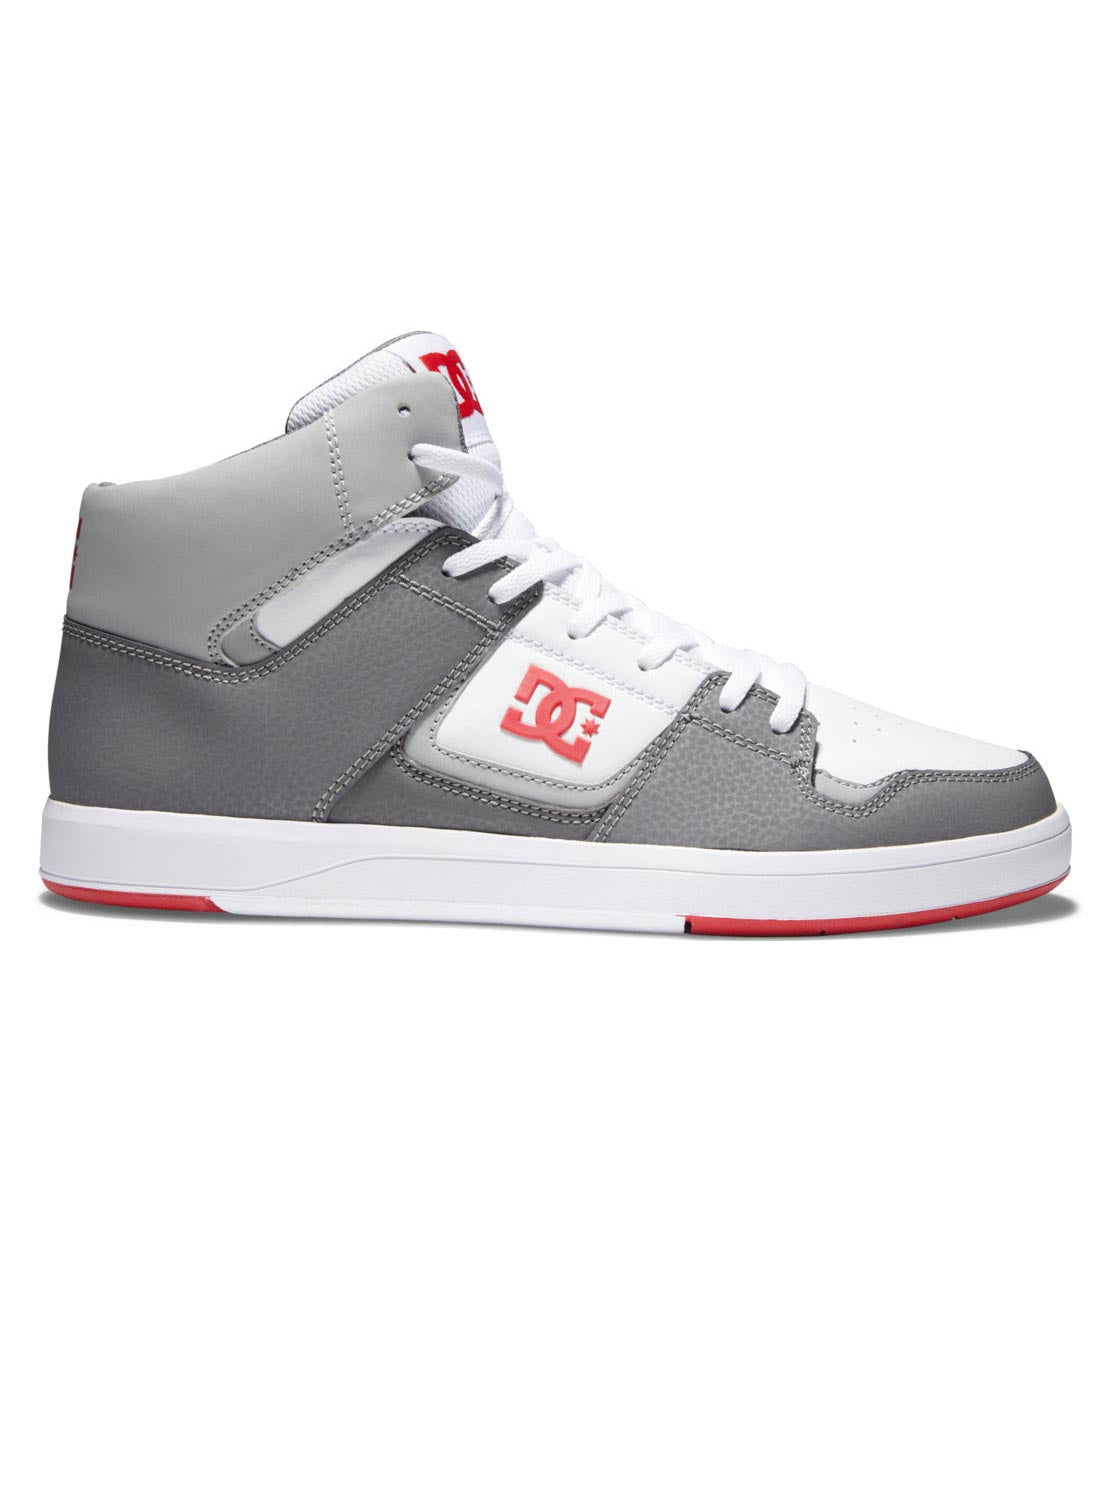 DC Shoes Cure Hi Top Weiß/Grau/Rot | Meistverkaufte Produkte | Neue Produkte | Neueste Produkte | surfdevils.com